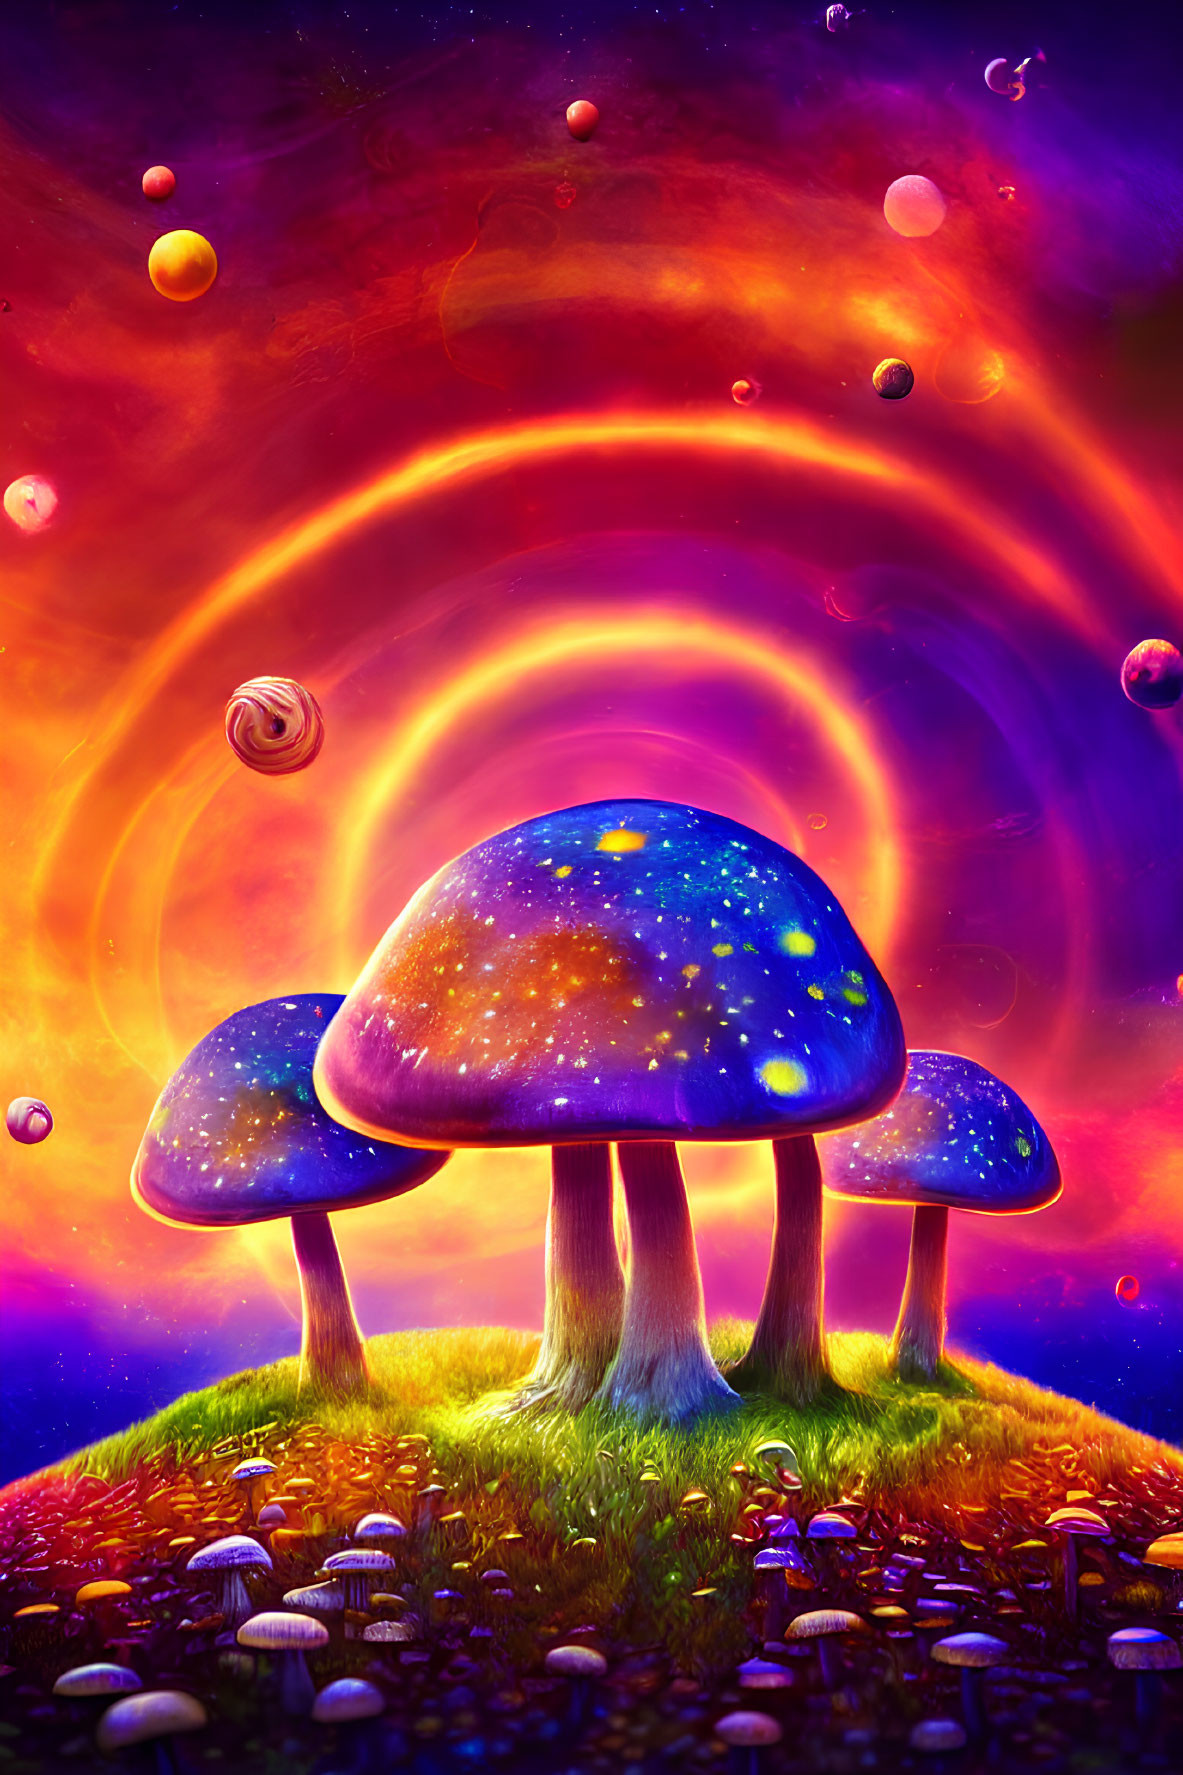 Colorful cosmic-themed mushroom digital artwork on grassy knoll under swirling galaxy sky.